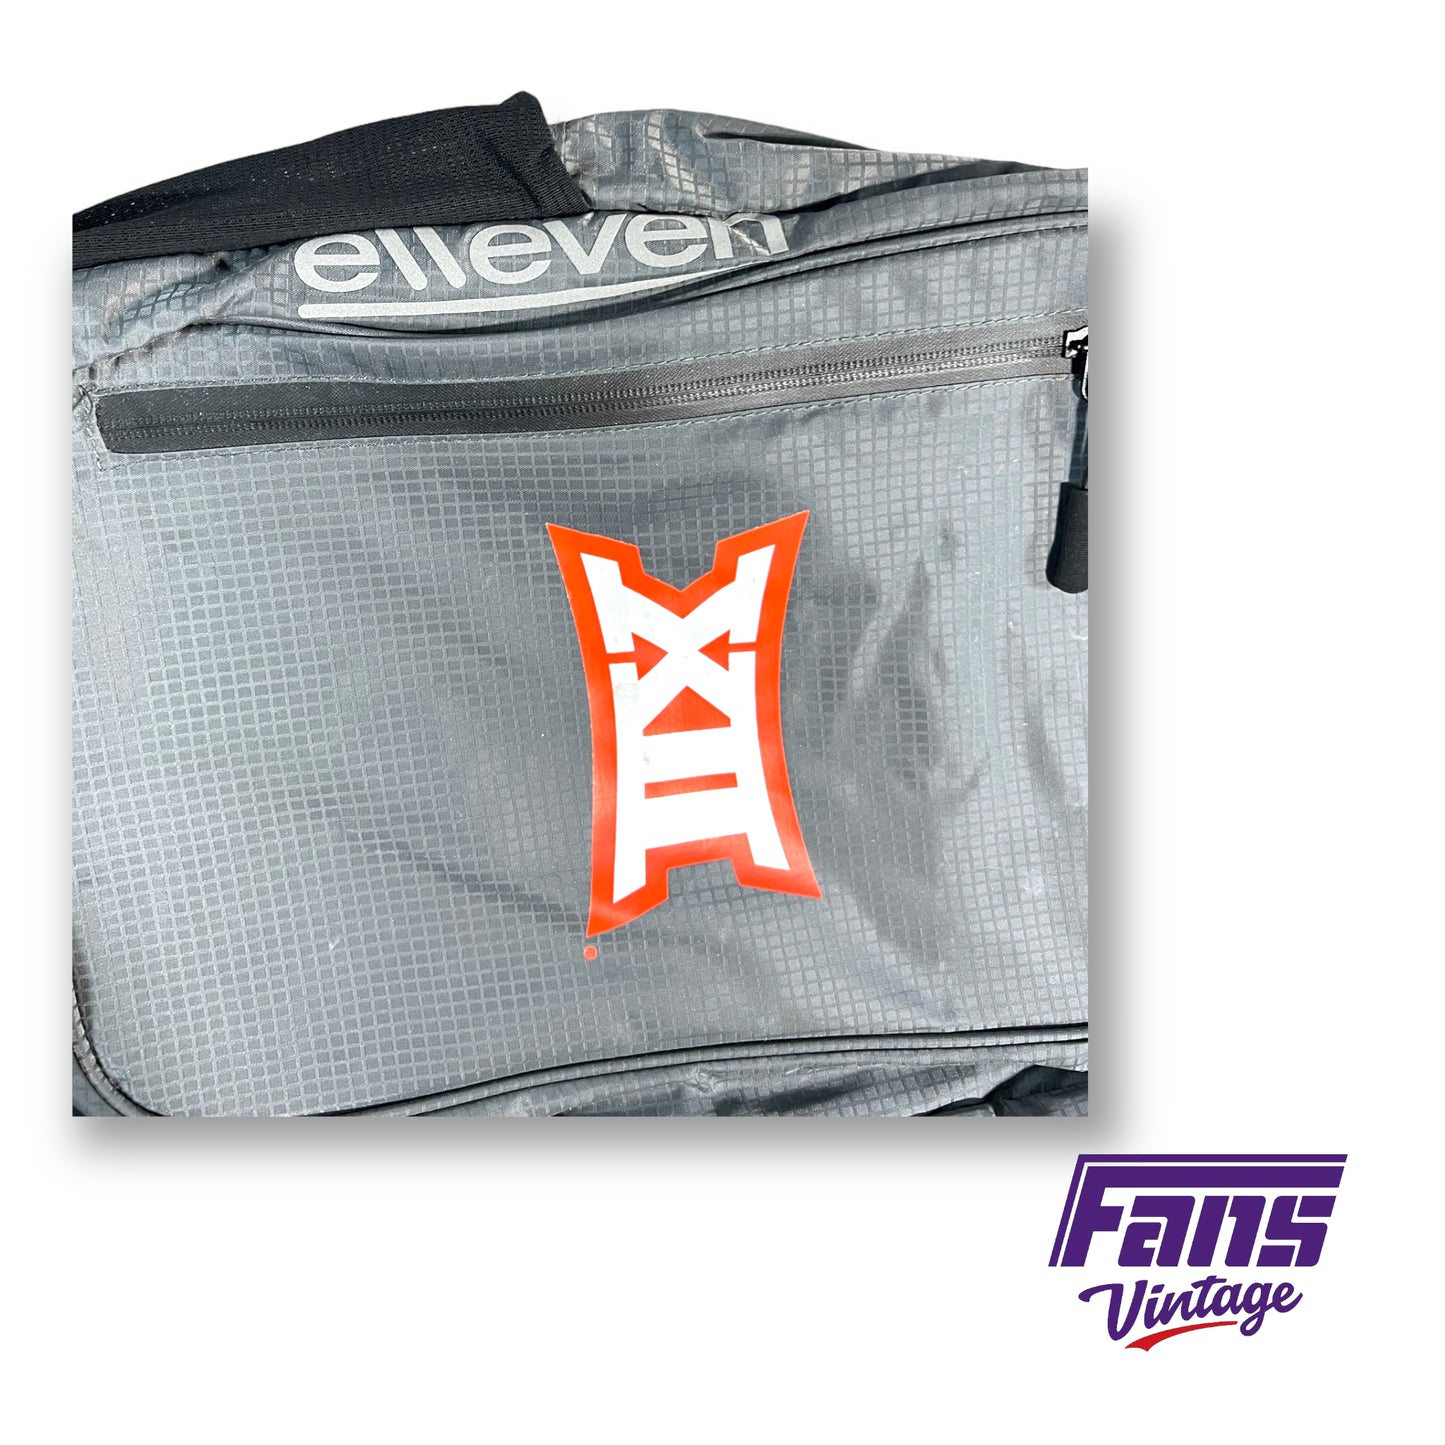 Big XII TCU team issued backpack - Elleven Brand